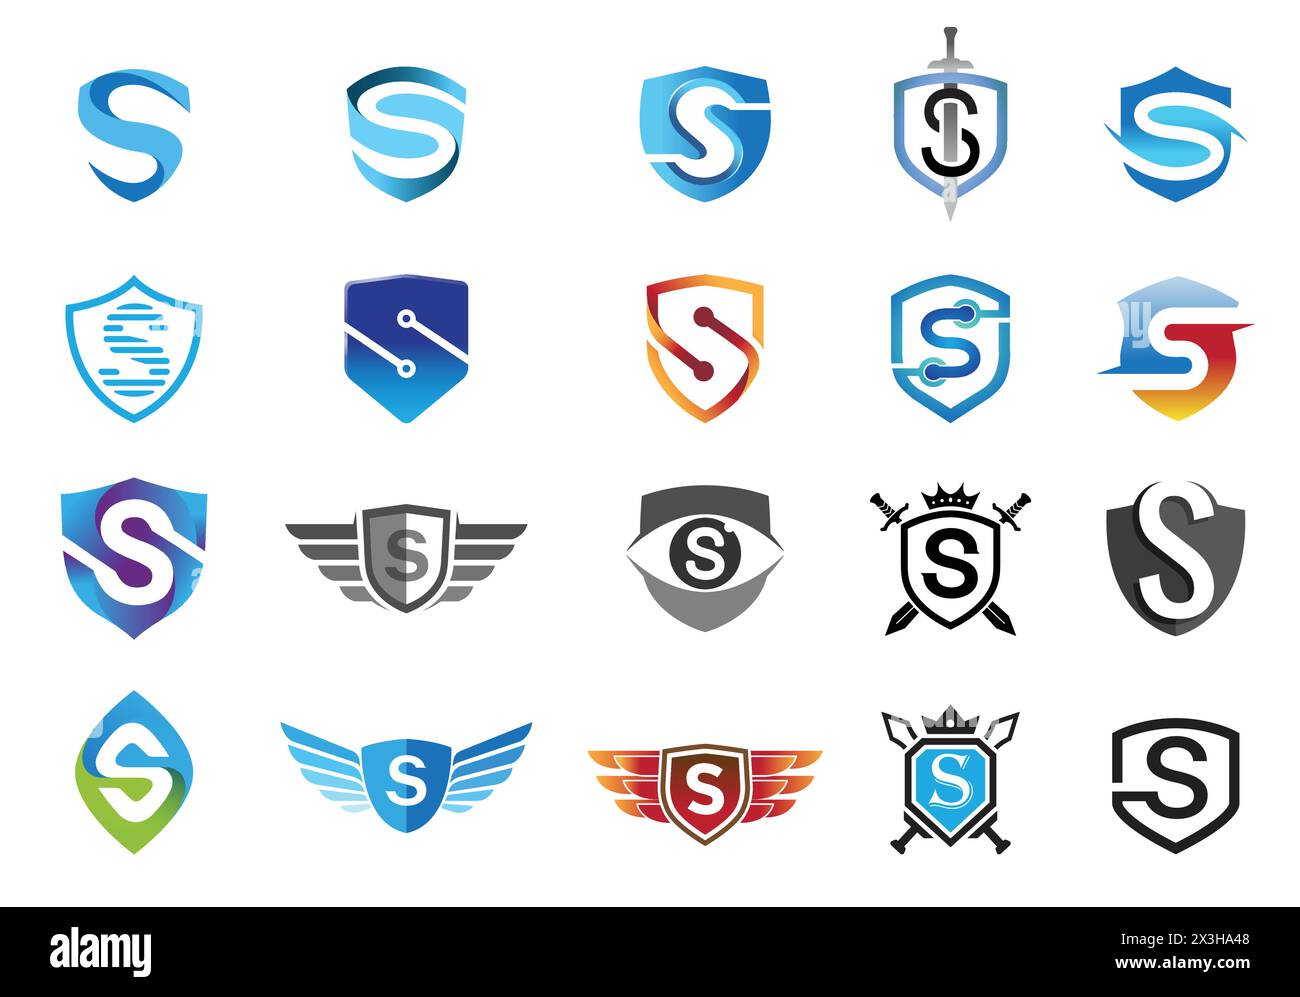 Creative Shield & Security Symbol Letter S Collection Logo Vektor Icons Design Illustration Stock Vektor